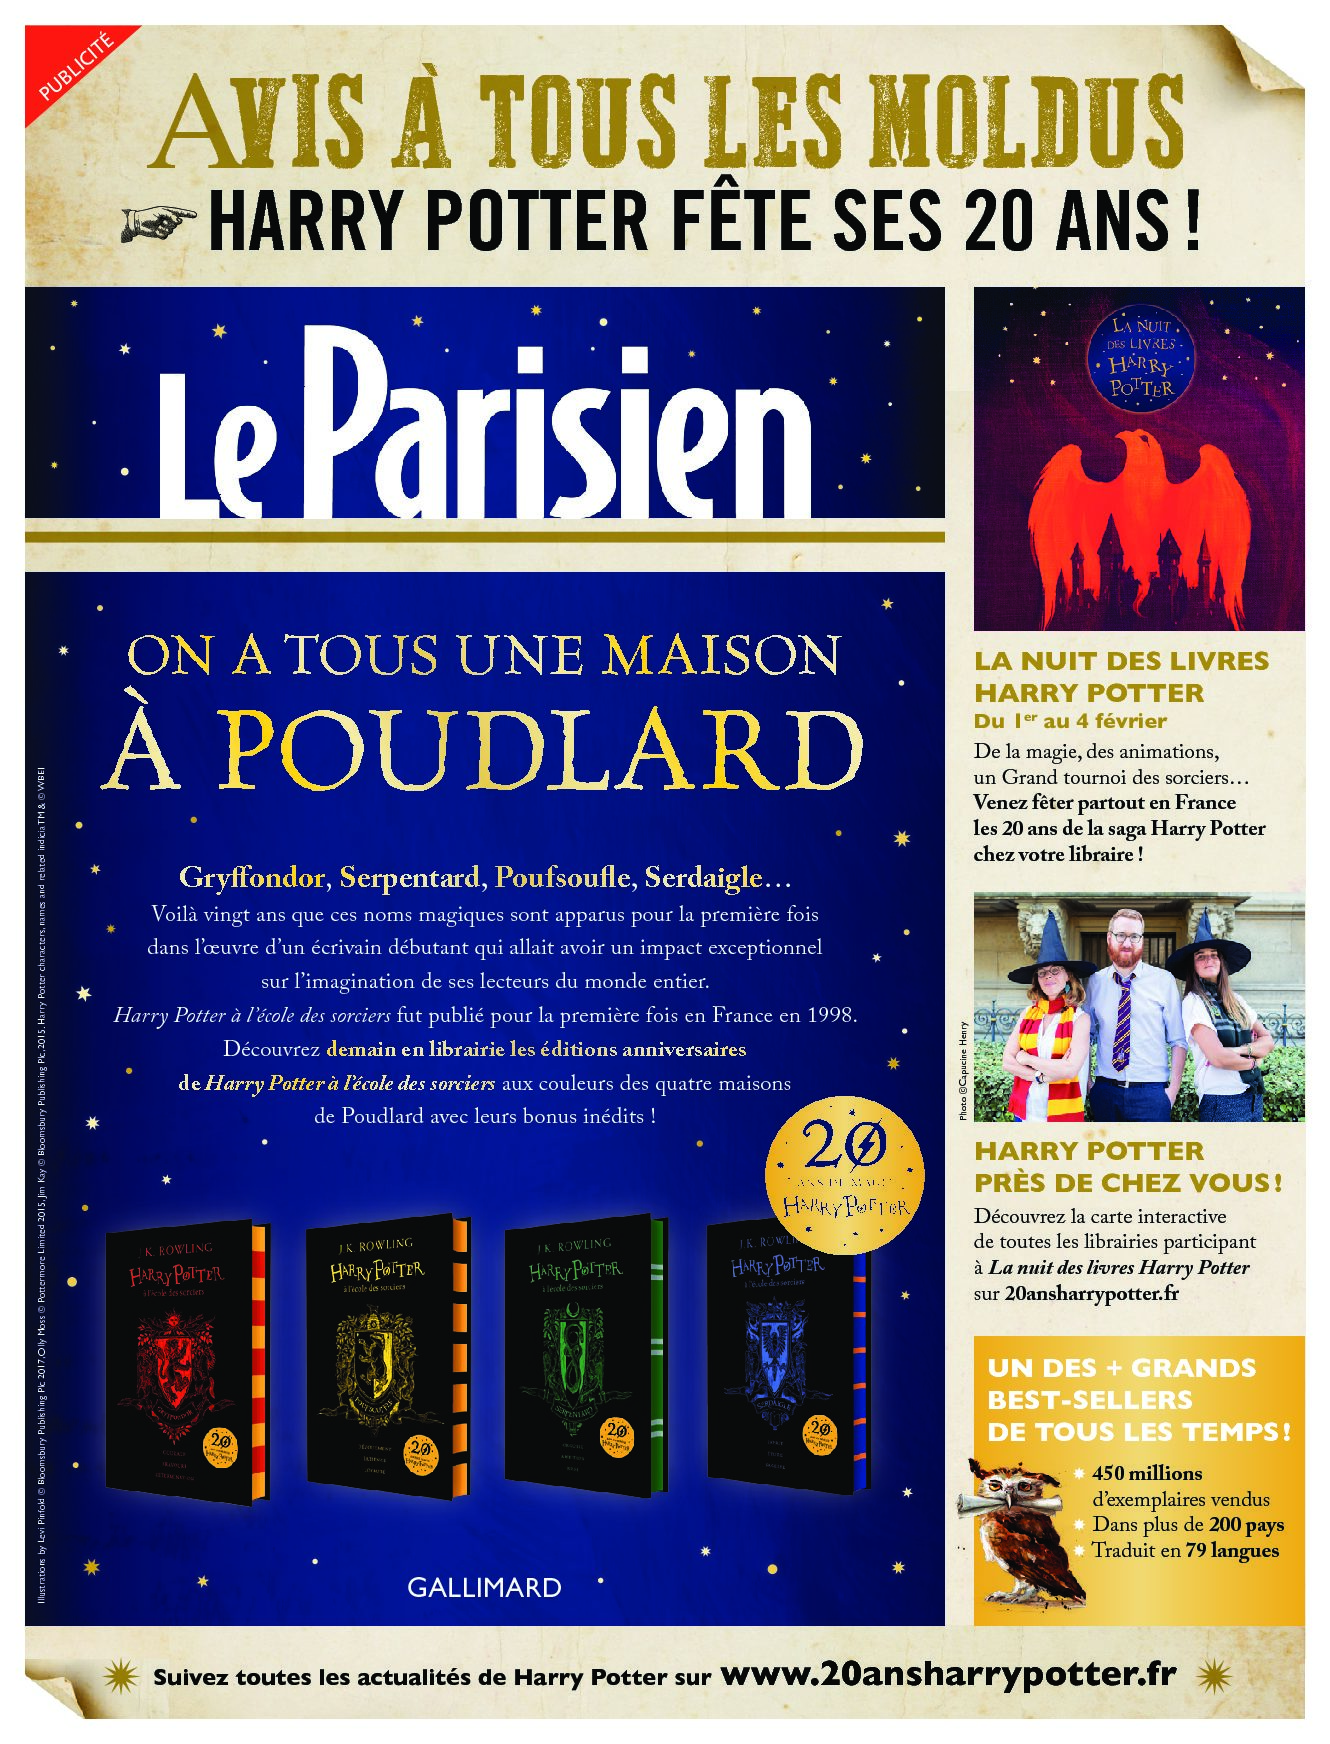 Gallimard et Warner Bros. fêtent les 20 ans de la saga ...